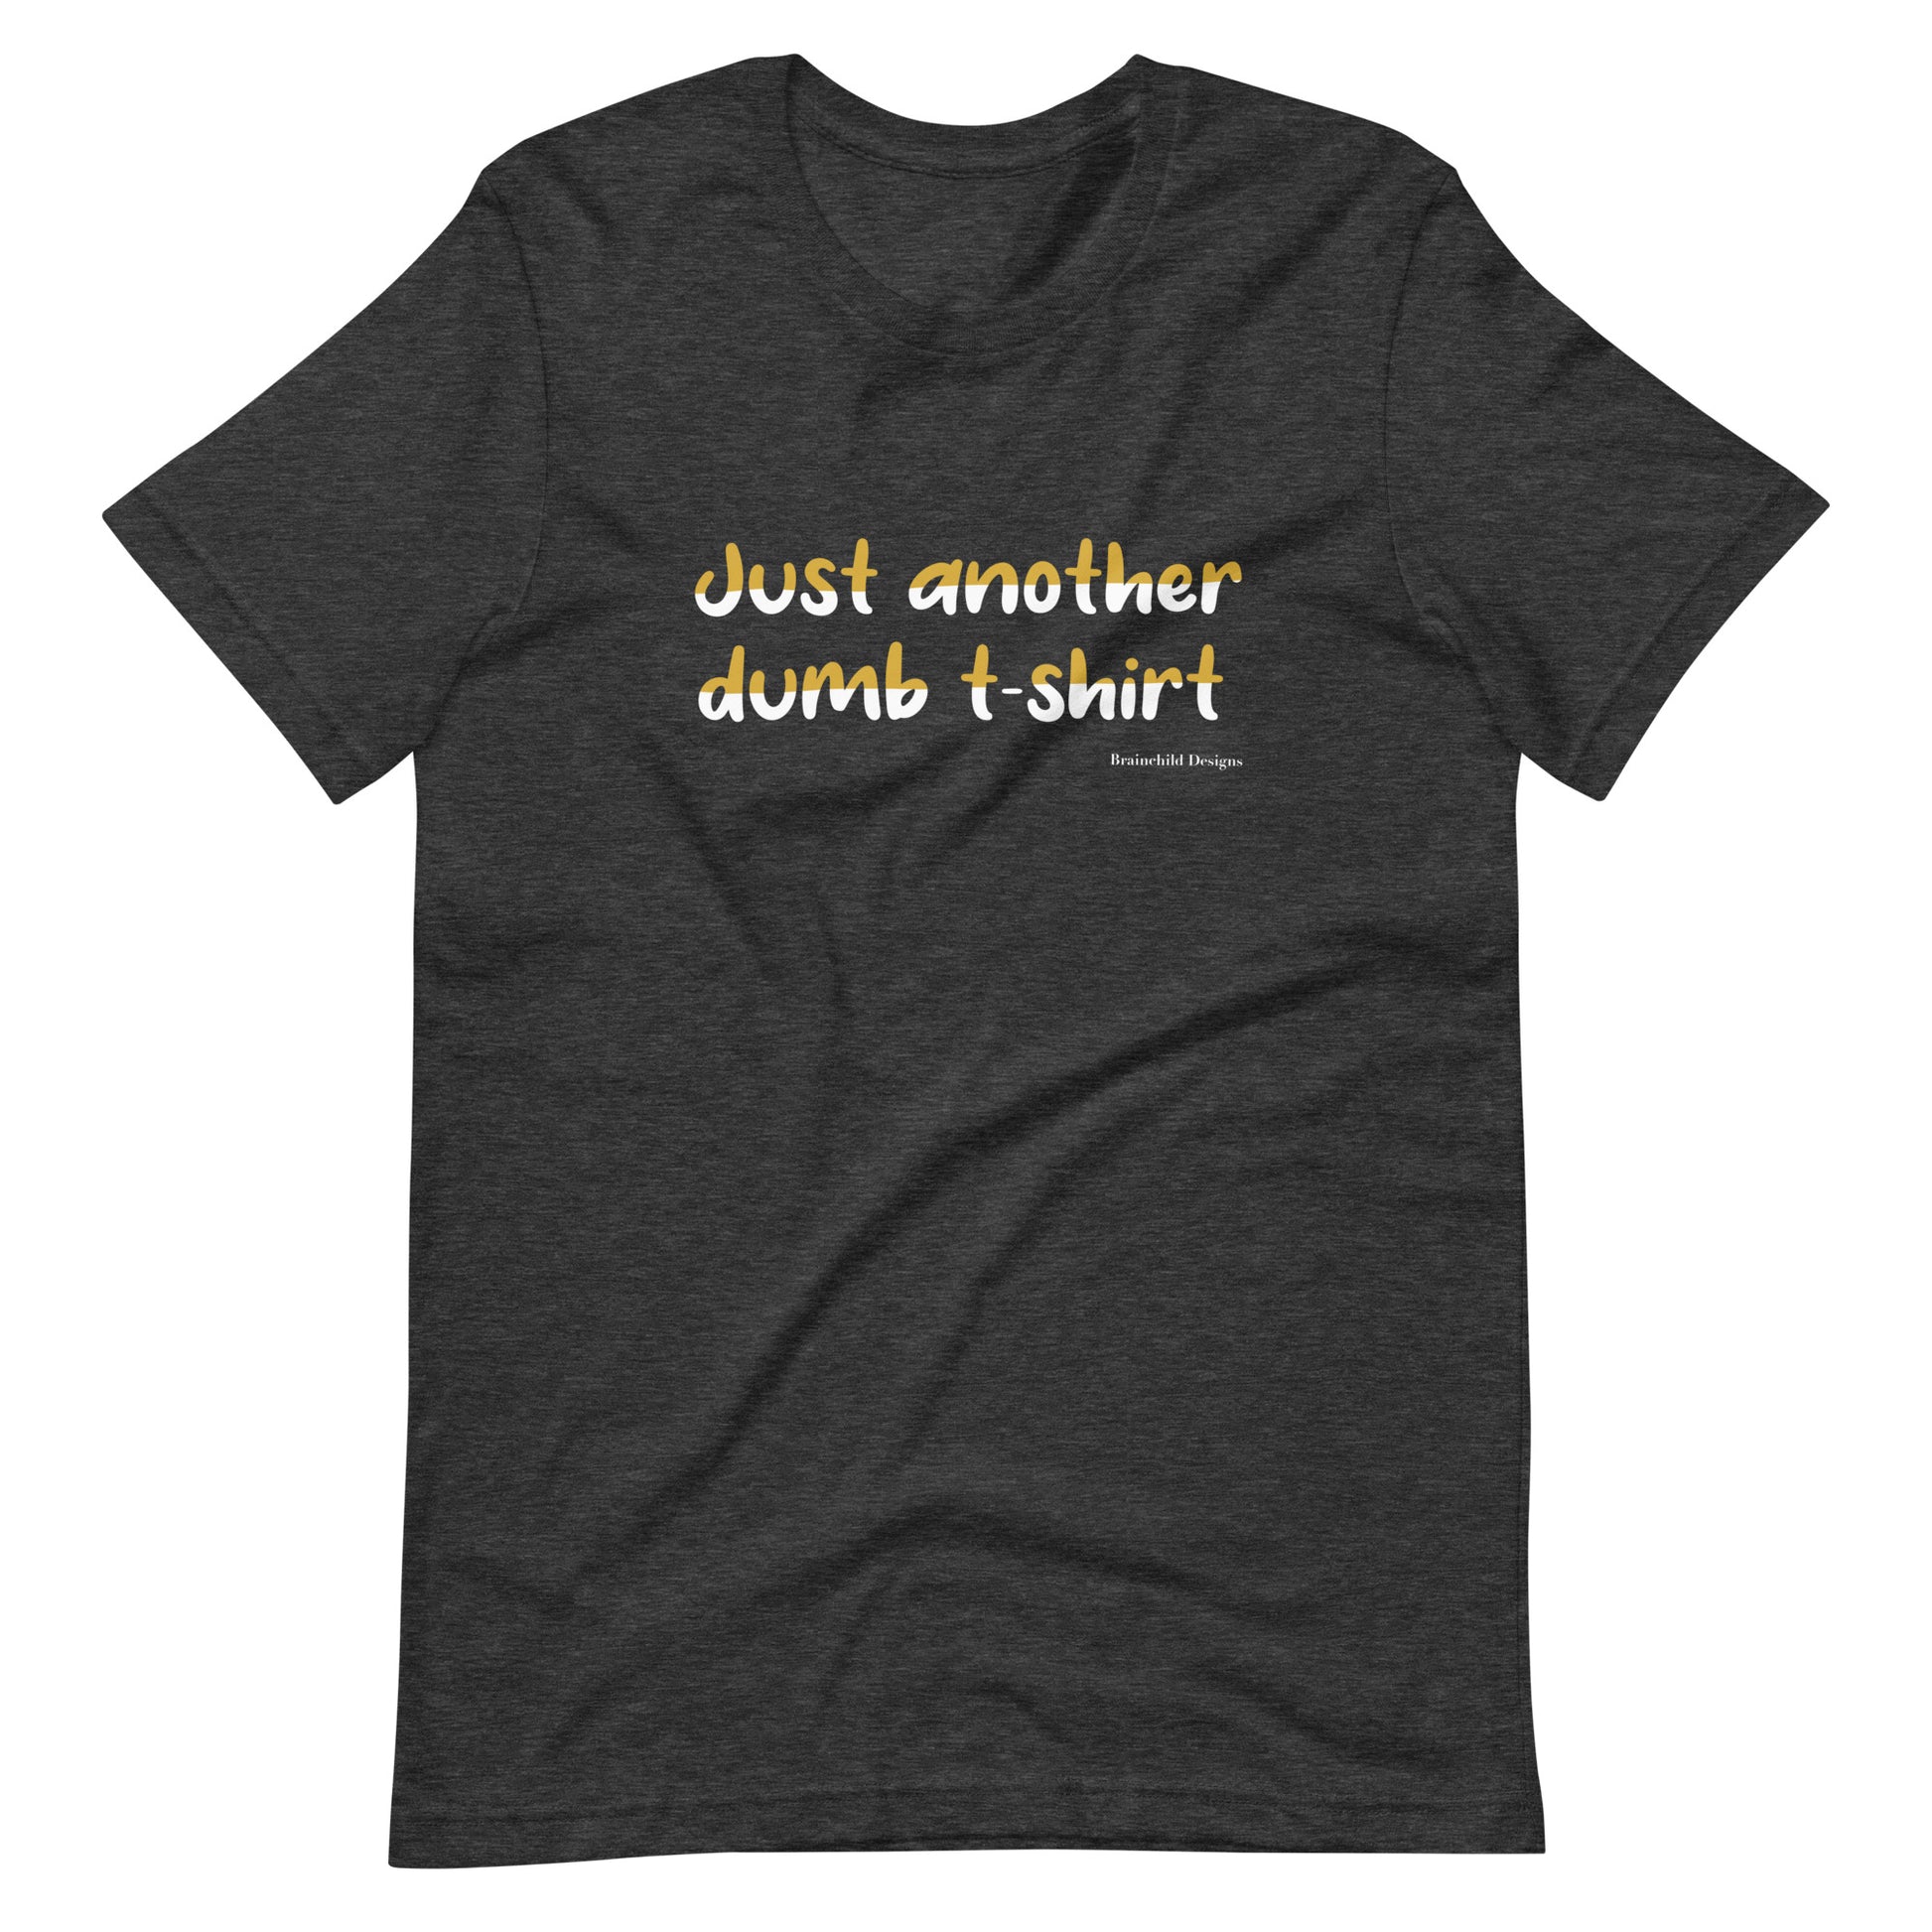 "Just another dumb t-shirt" - Adult Unisex T-Shirt - Brainchild Designs